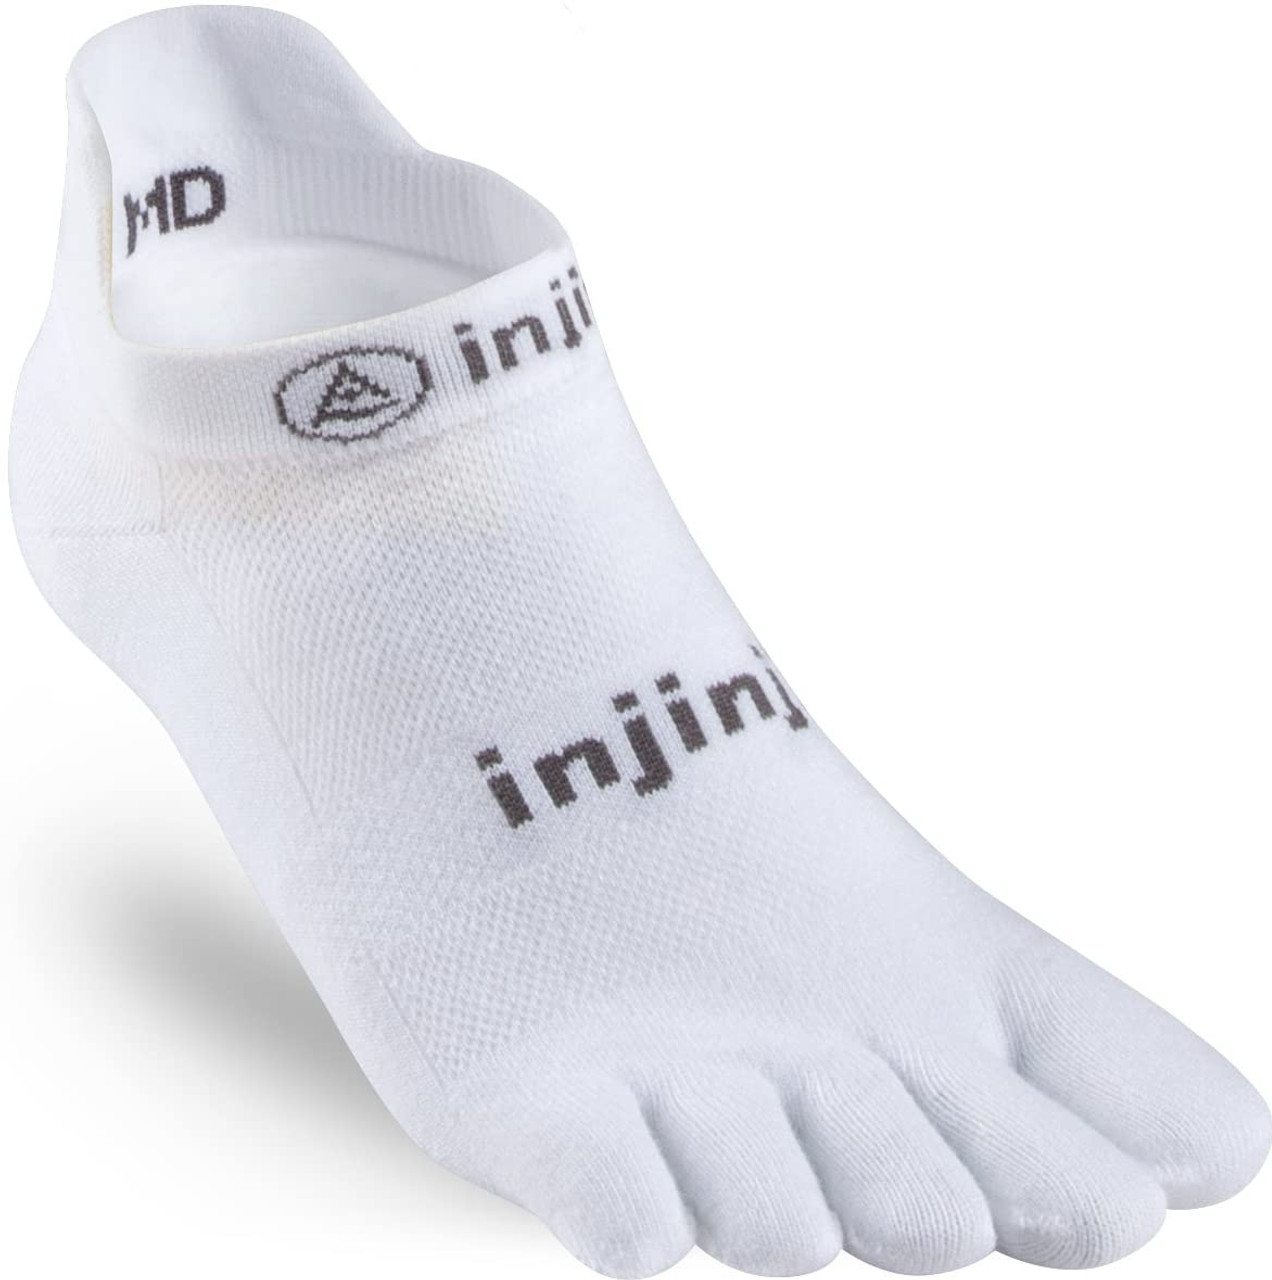 Injinji Toe Socks - Run Original Weight CoolMax